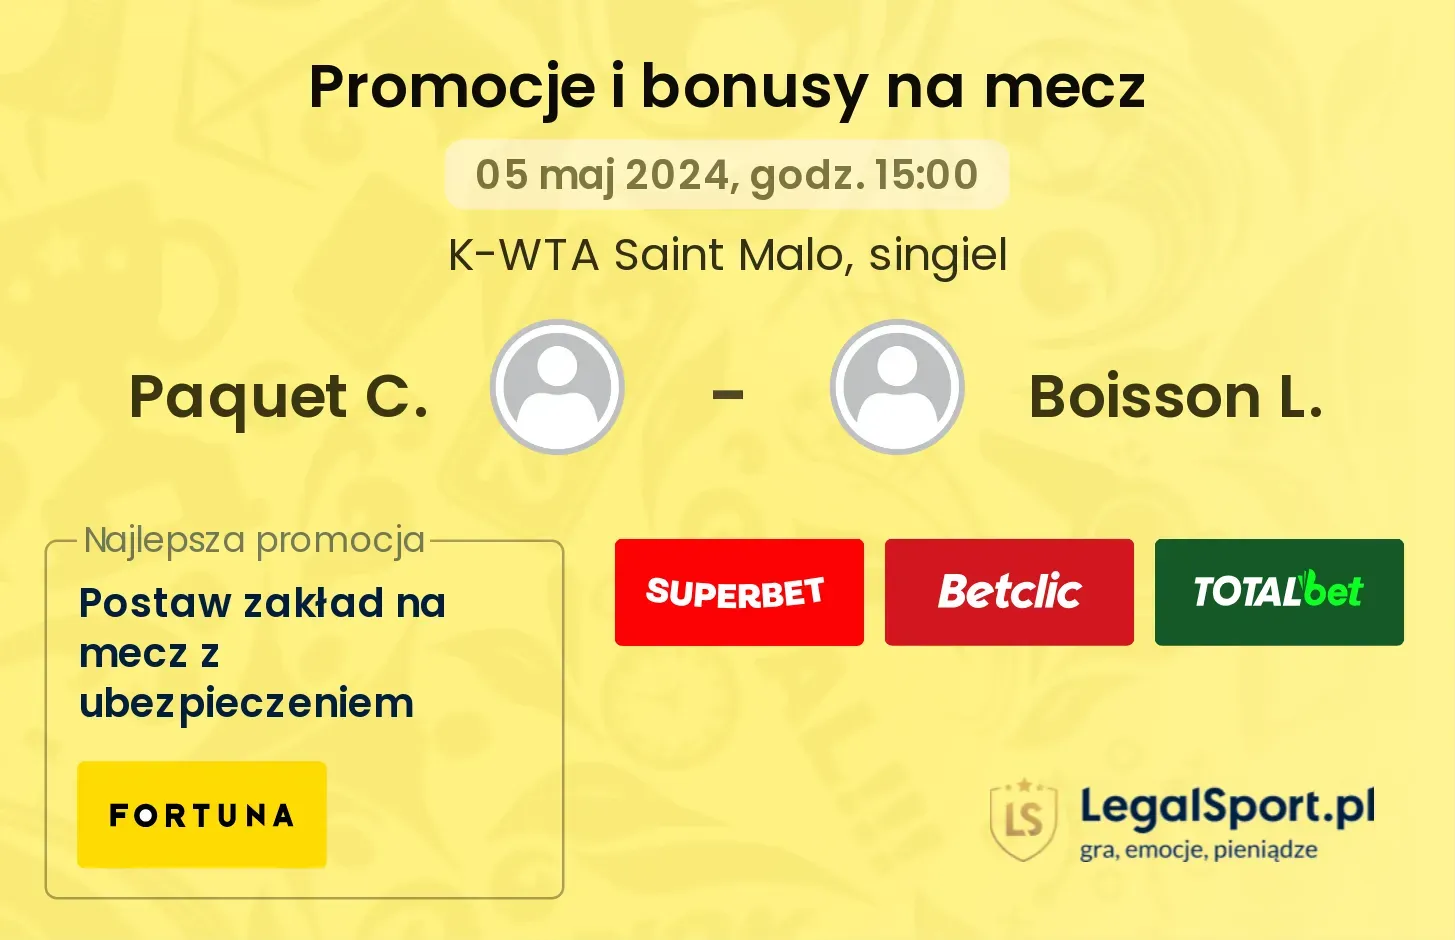 Paquet C. - Boisson L. promocje bonusy na mecz